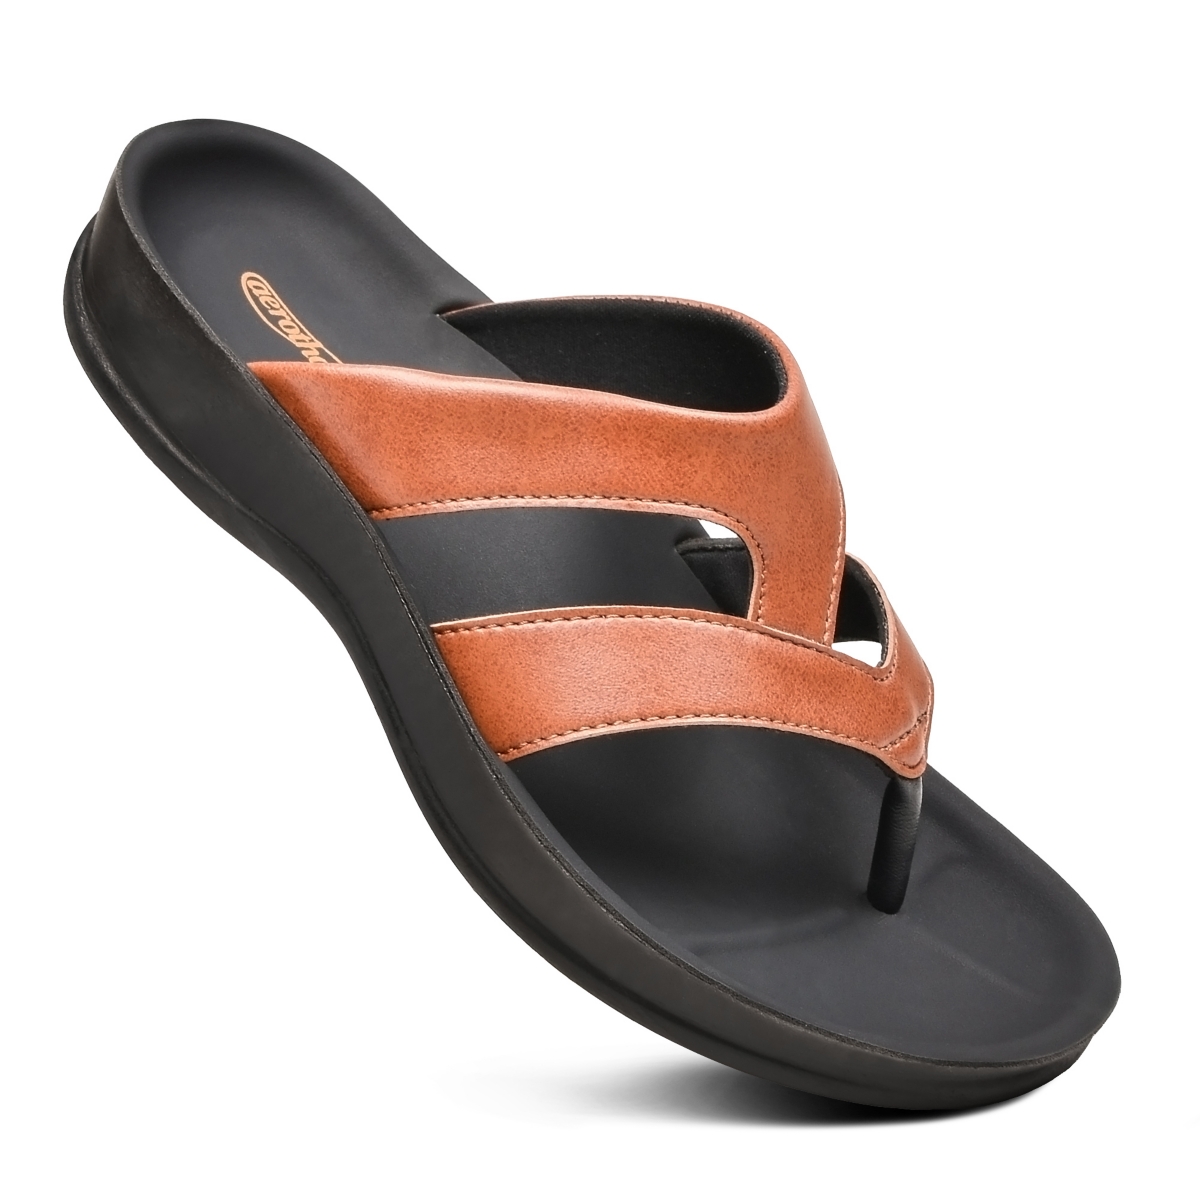 Women's Sandals Raido - Tan